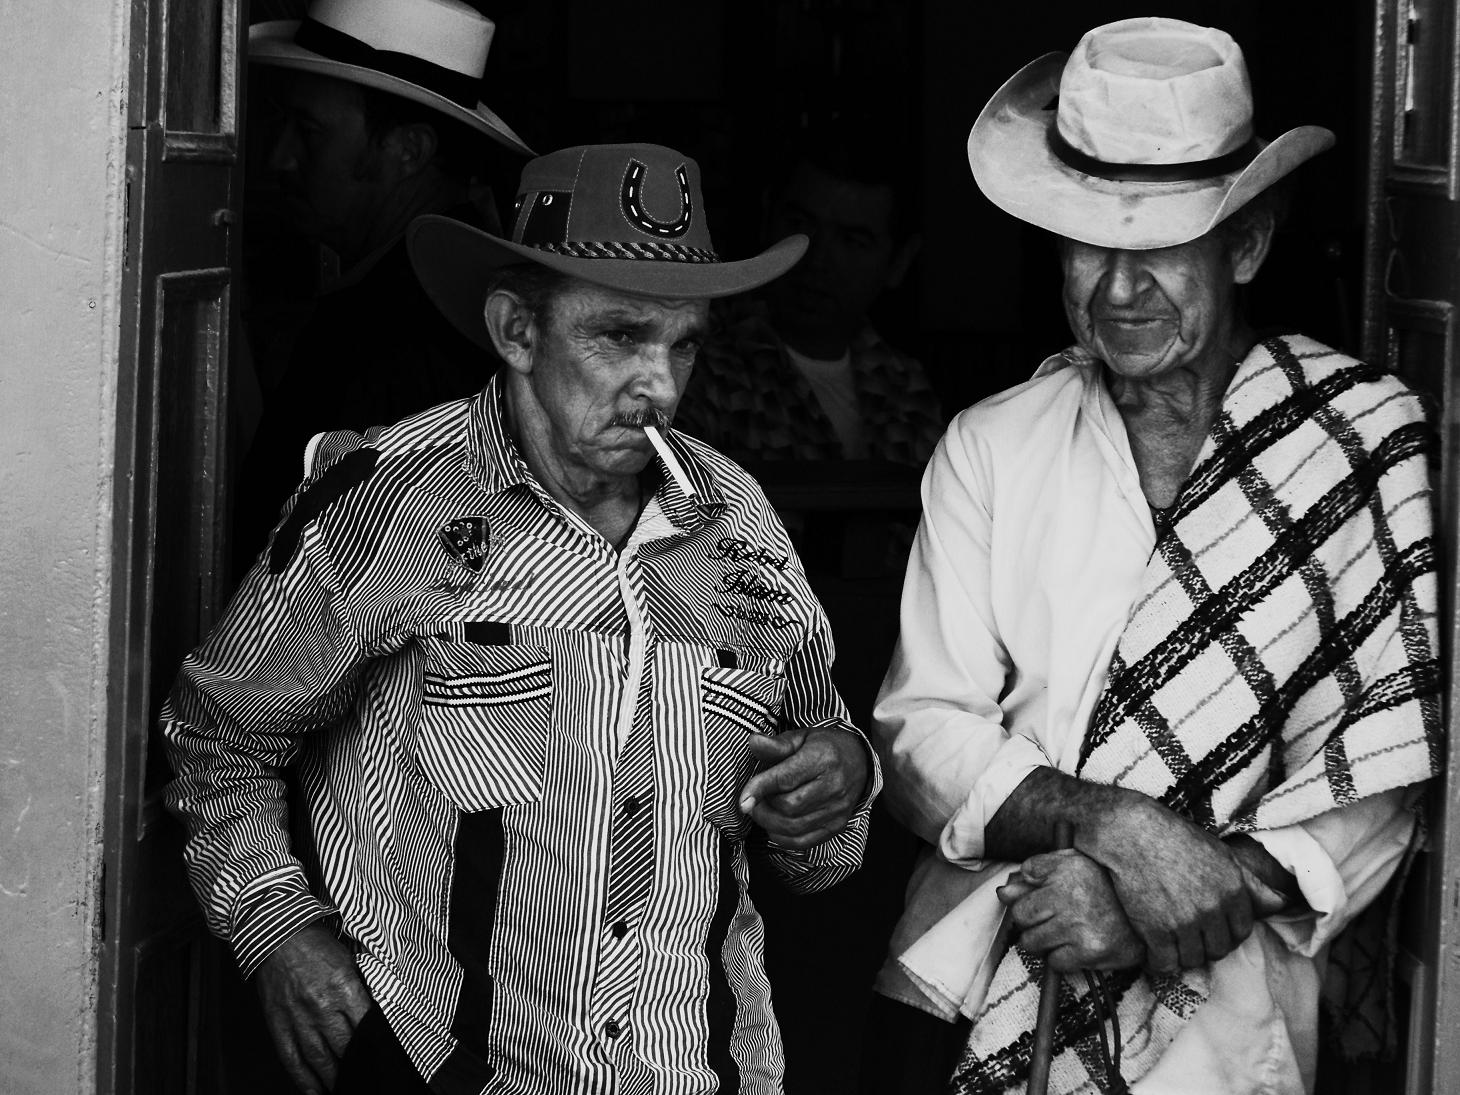 Ranní cigareta, horská vesnice Concepcion, Kolumbie